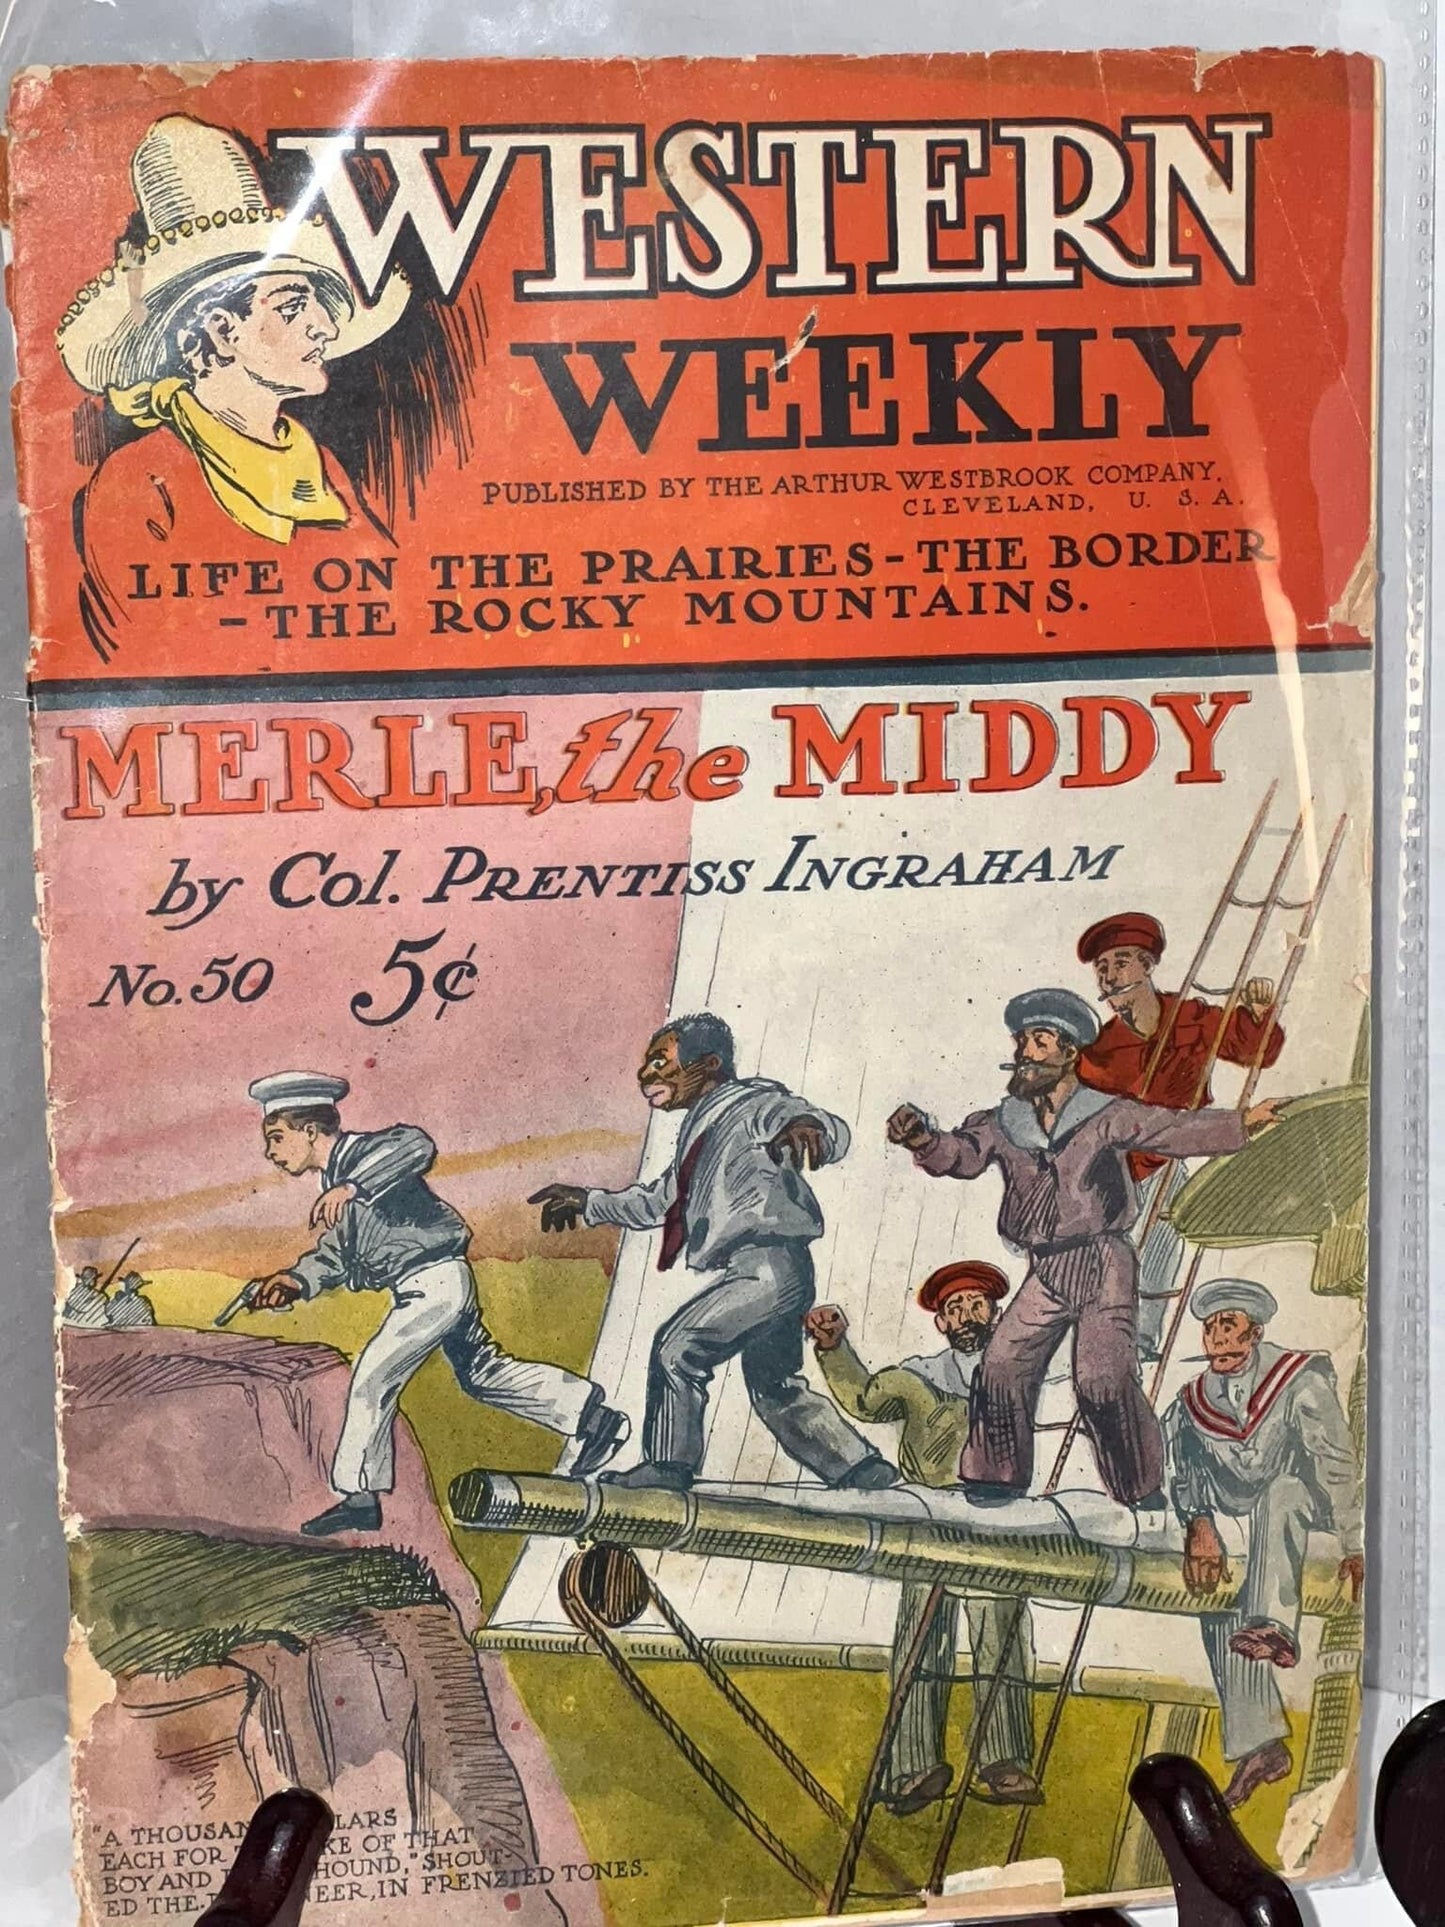 Antique 1912 western weekly magazine 2 volumes Western action stories